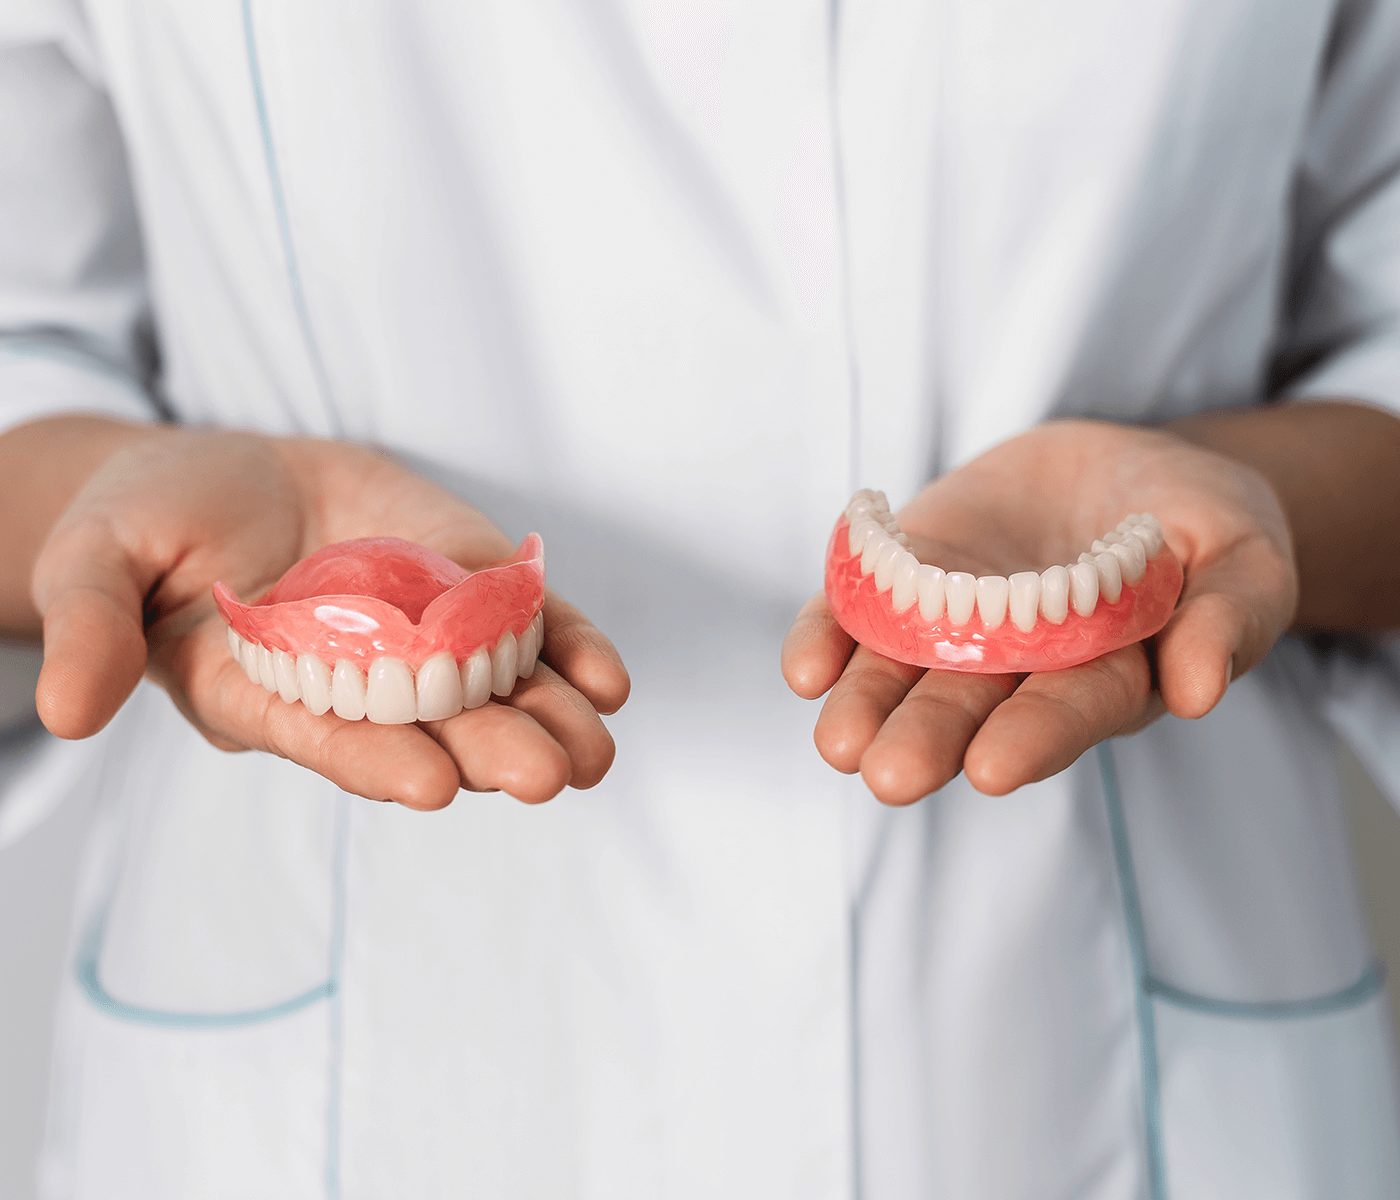 Implants vs Dentures